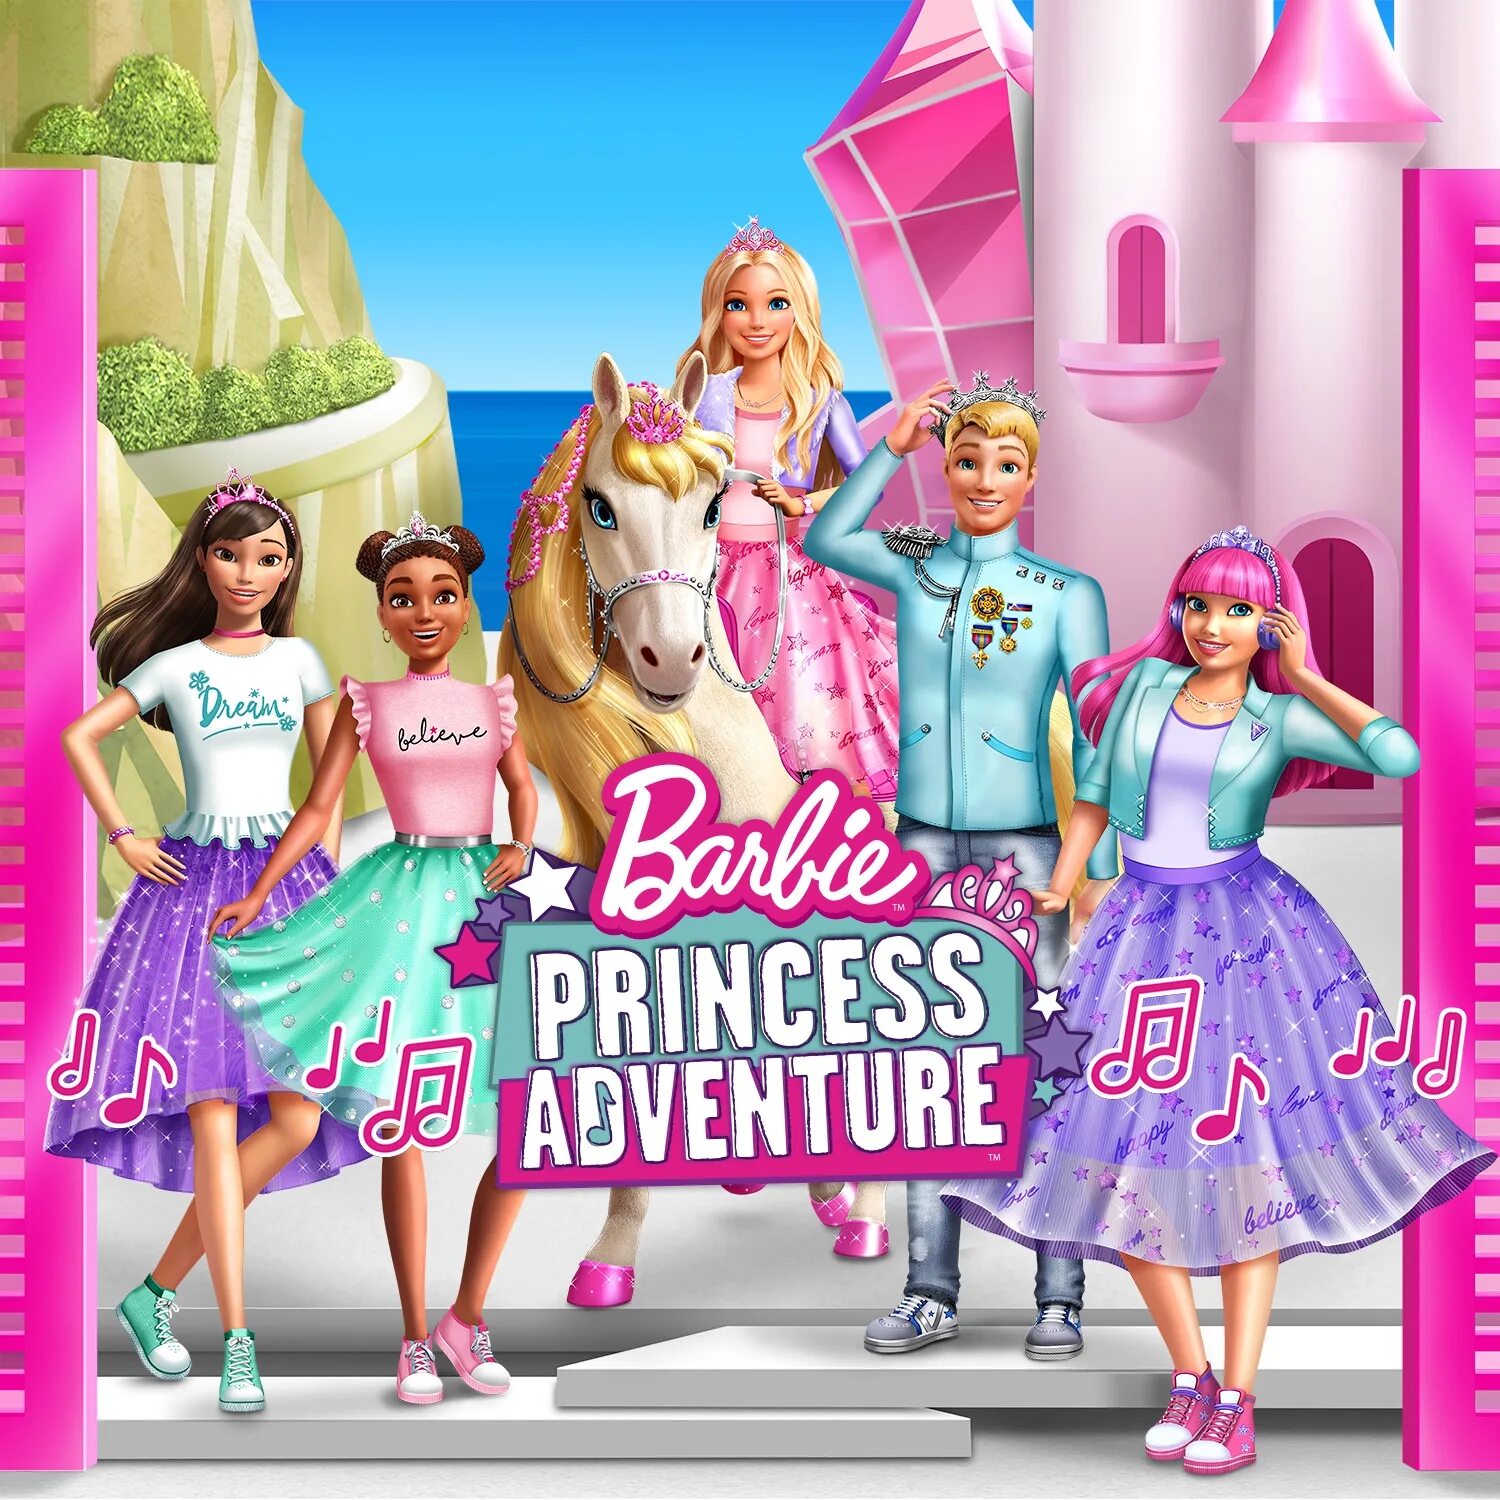 Барби приключения принцессы 2020. Барби Princess Adventure. Барби Нетфликс.